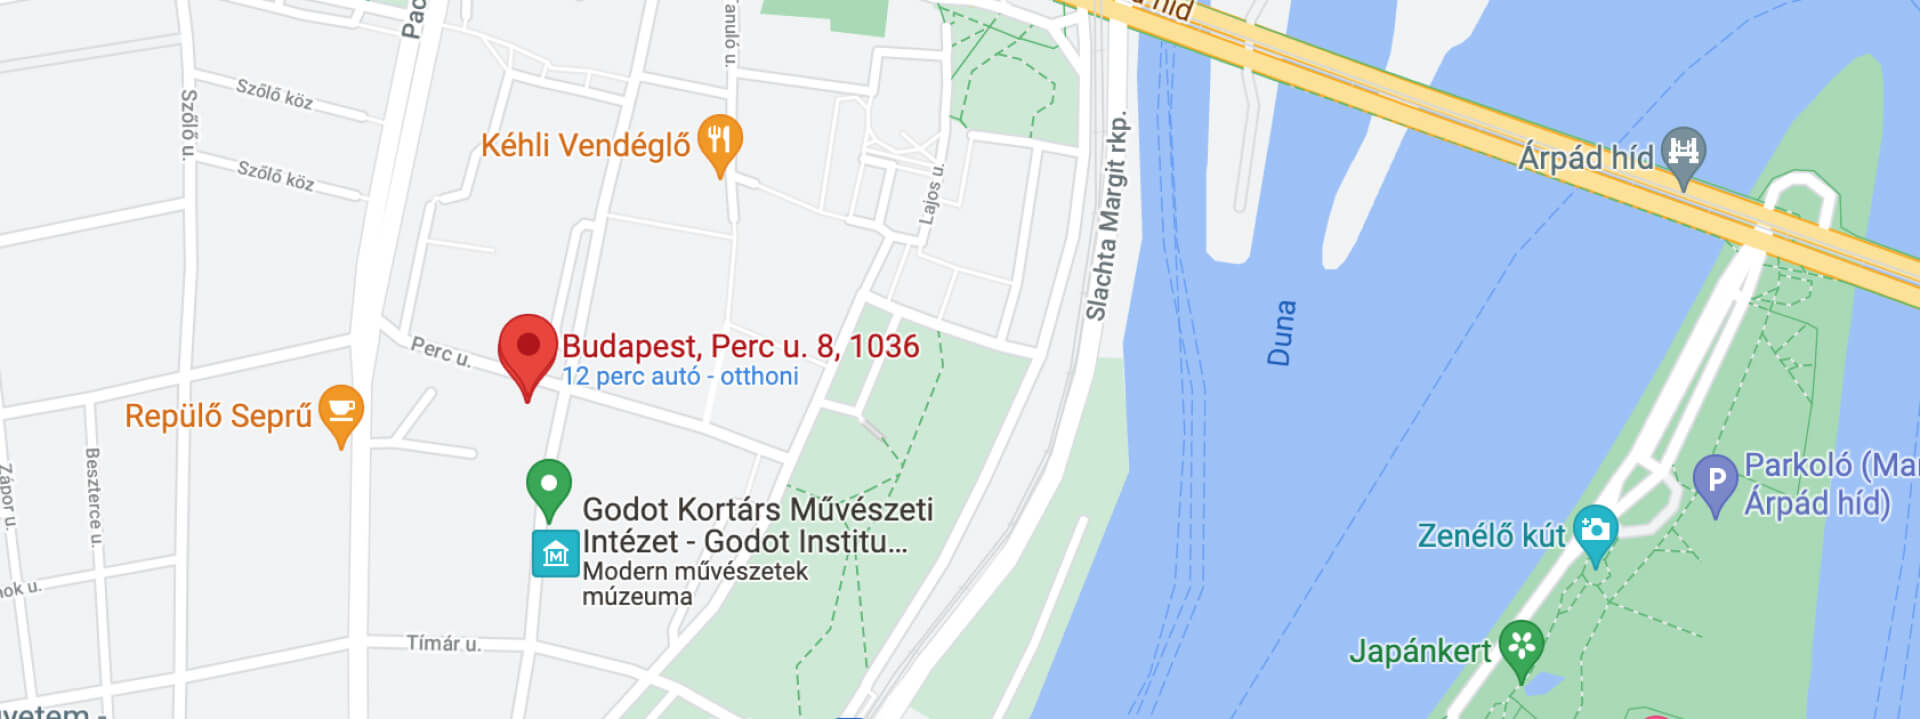 Budapest, Perc u. 8, 1036